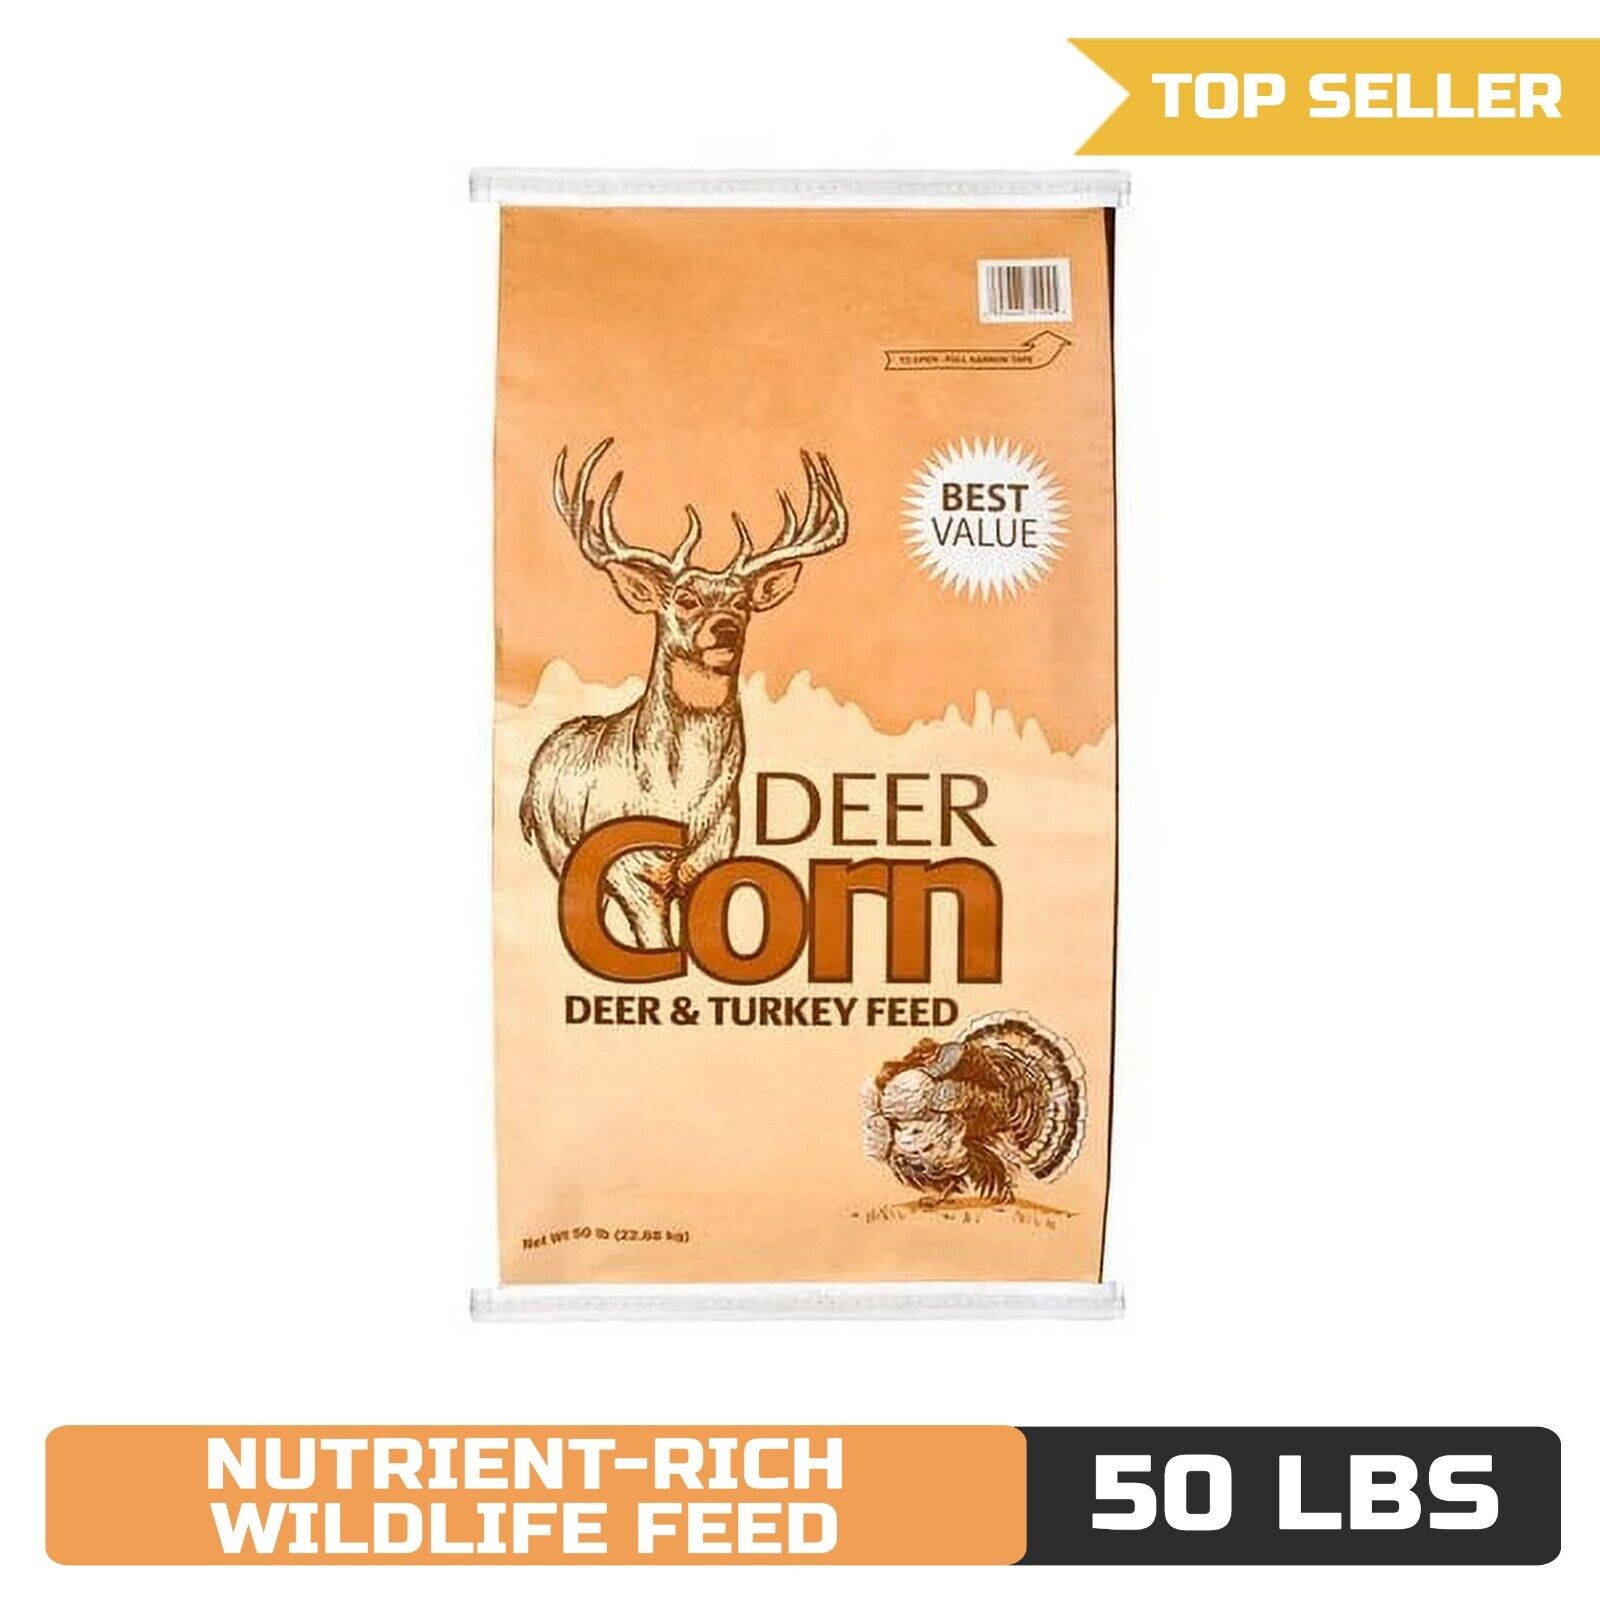 Manna Pro Deer Corn: Premium Deer & Turkey Feed, 50 lbs